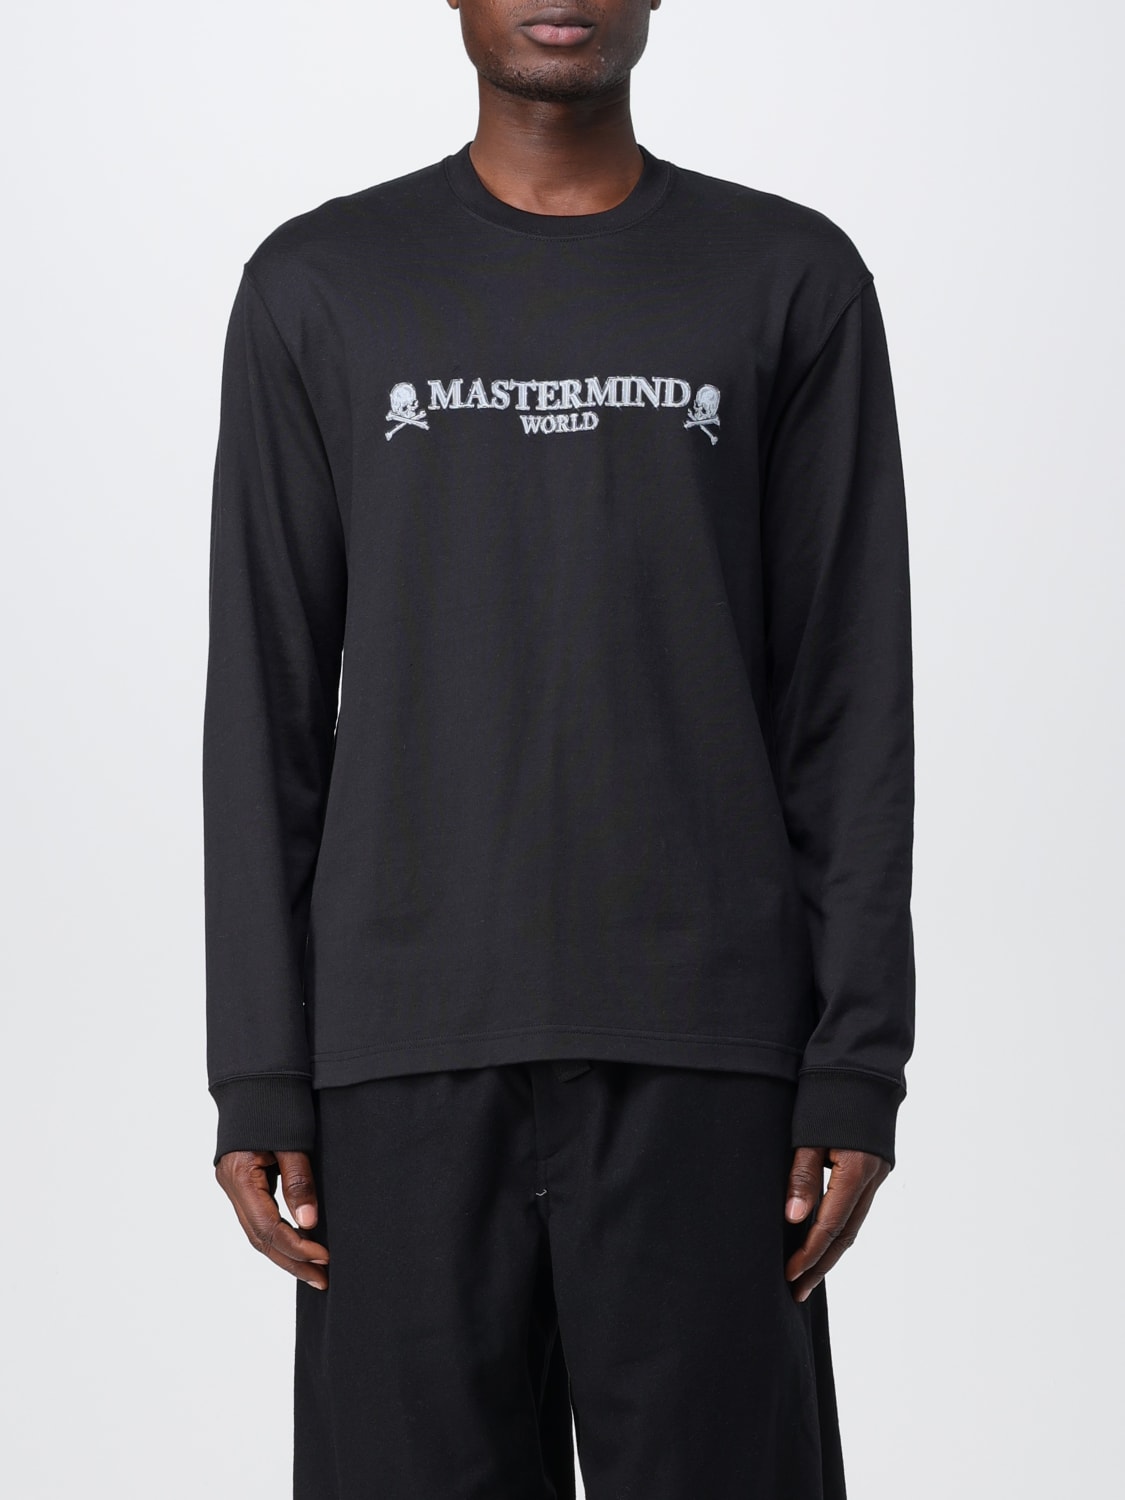 Mastermind World - T-shirt man